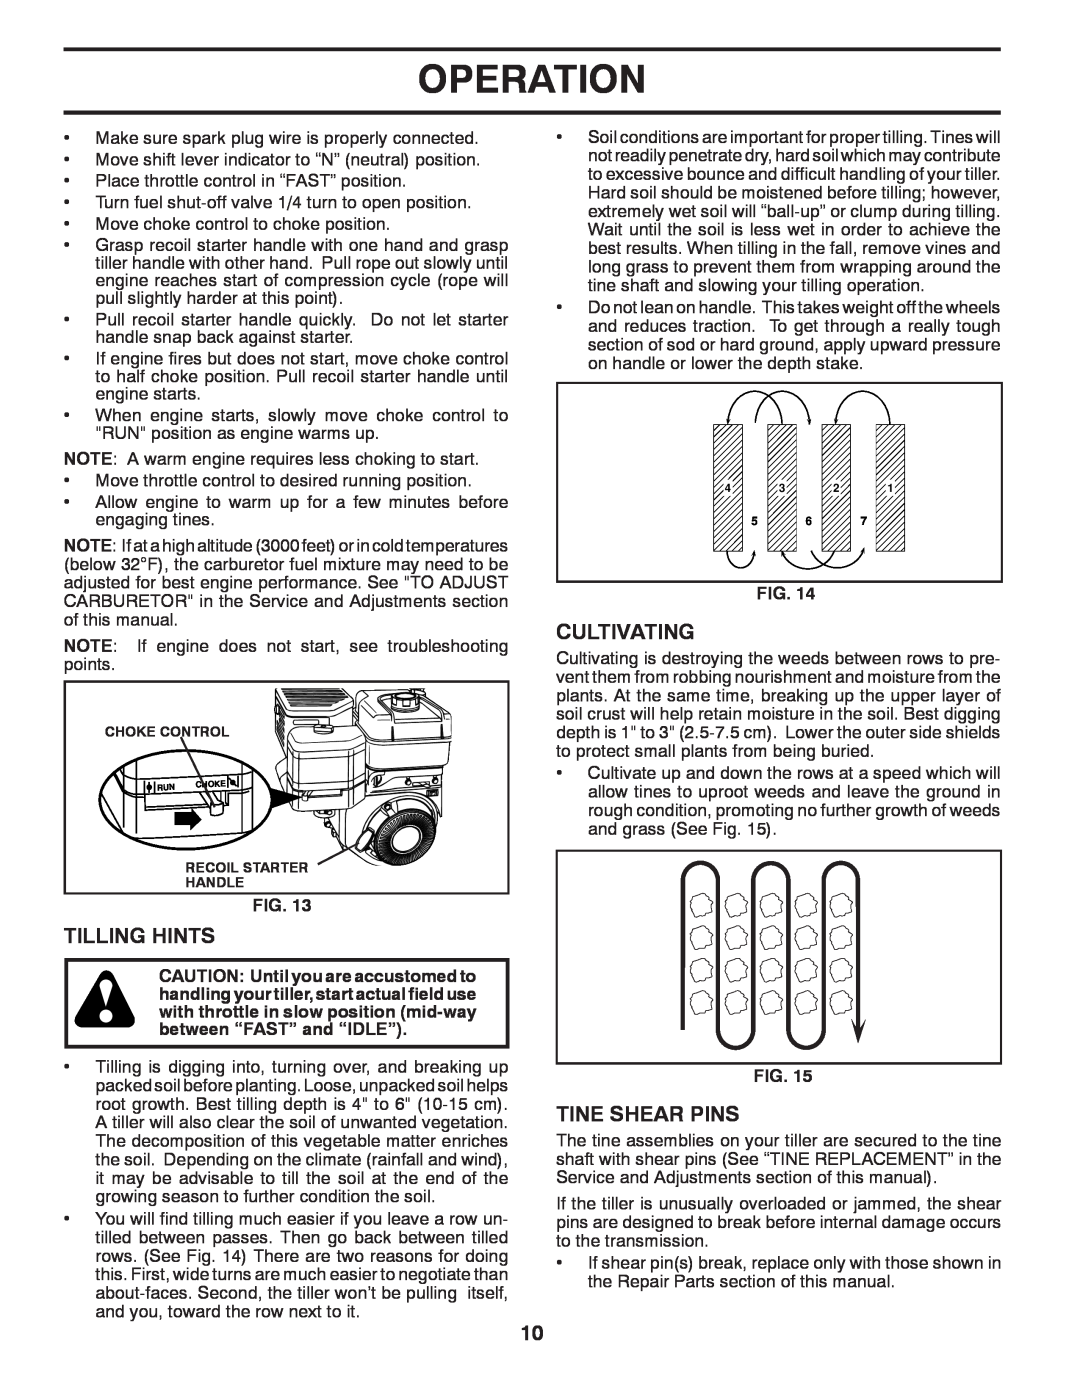 Poulan PRRT875X manual Tilling Hints, Cultivating, Tine Shear Pins, Operation 